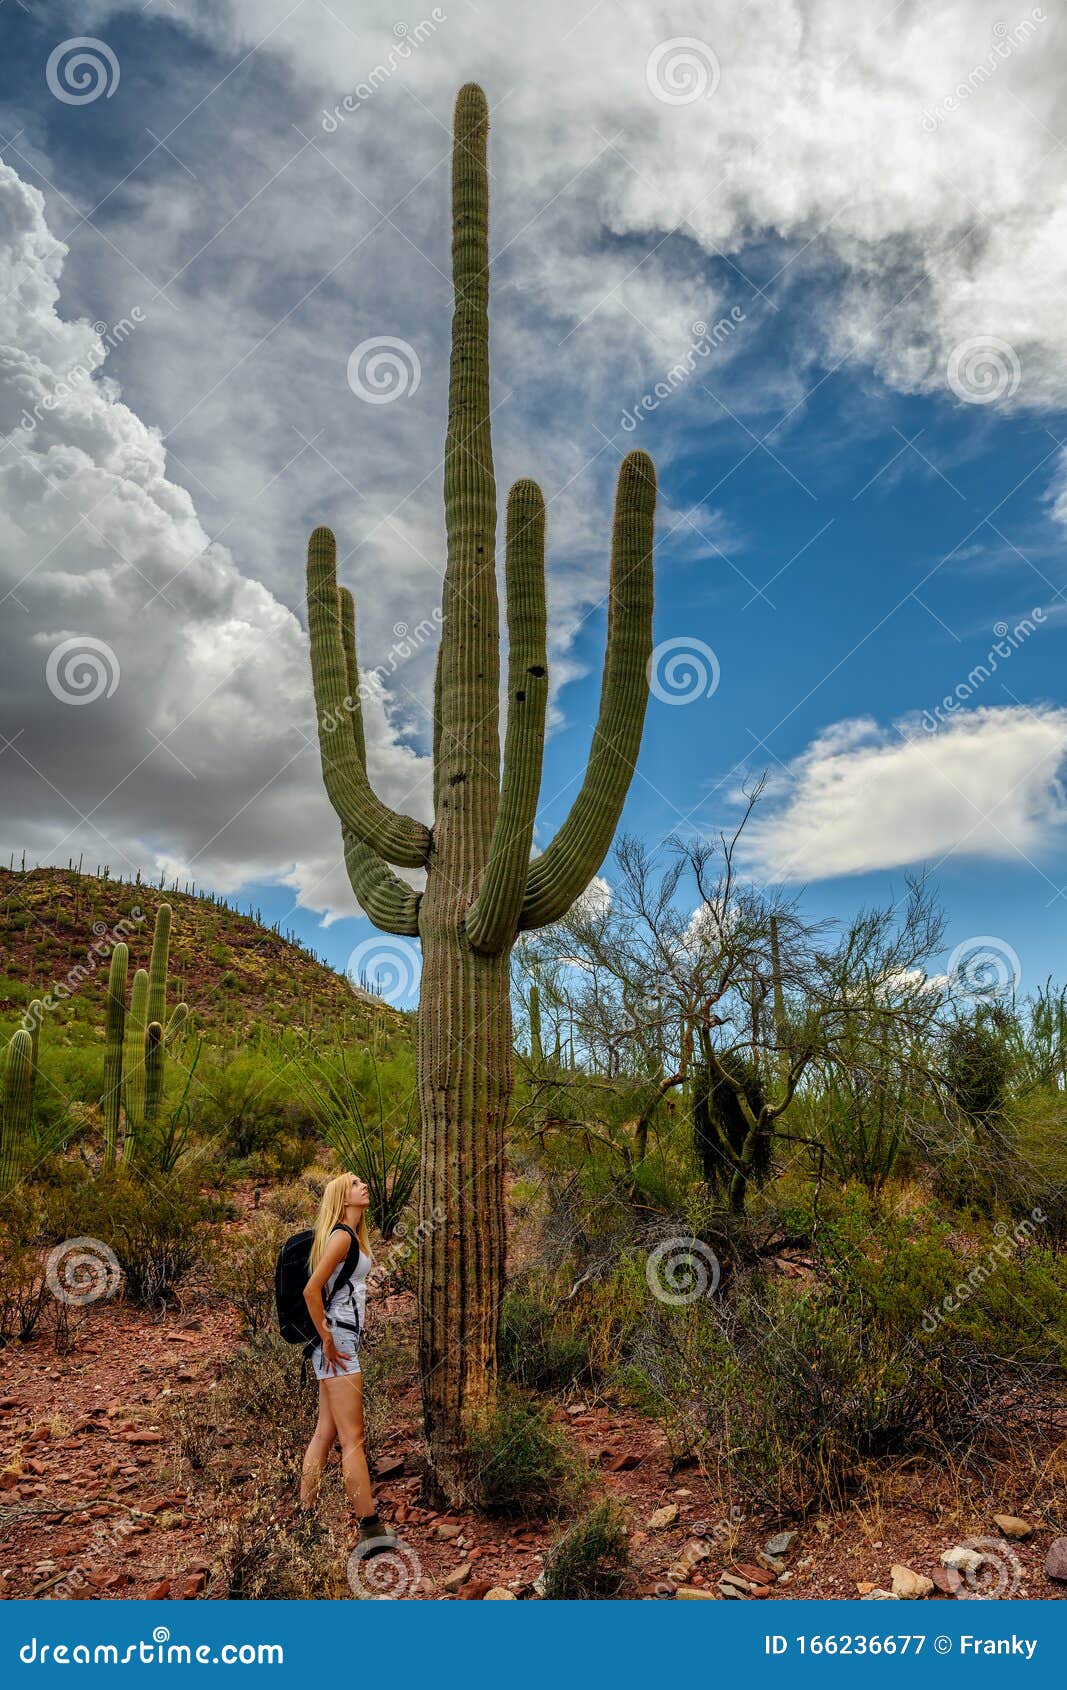 female nature lover admiring the saguaro cactus carnegiea gigantea in saguaro national park, arizona